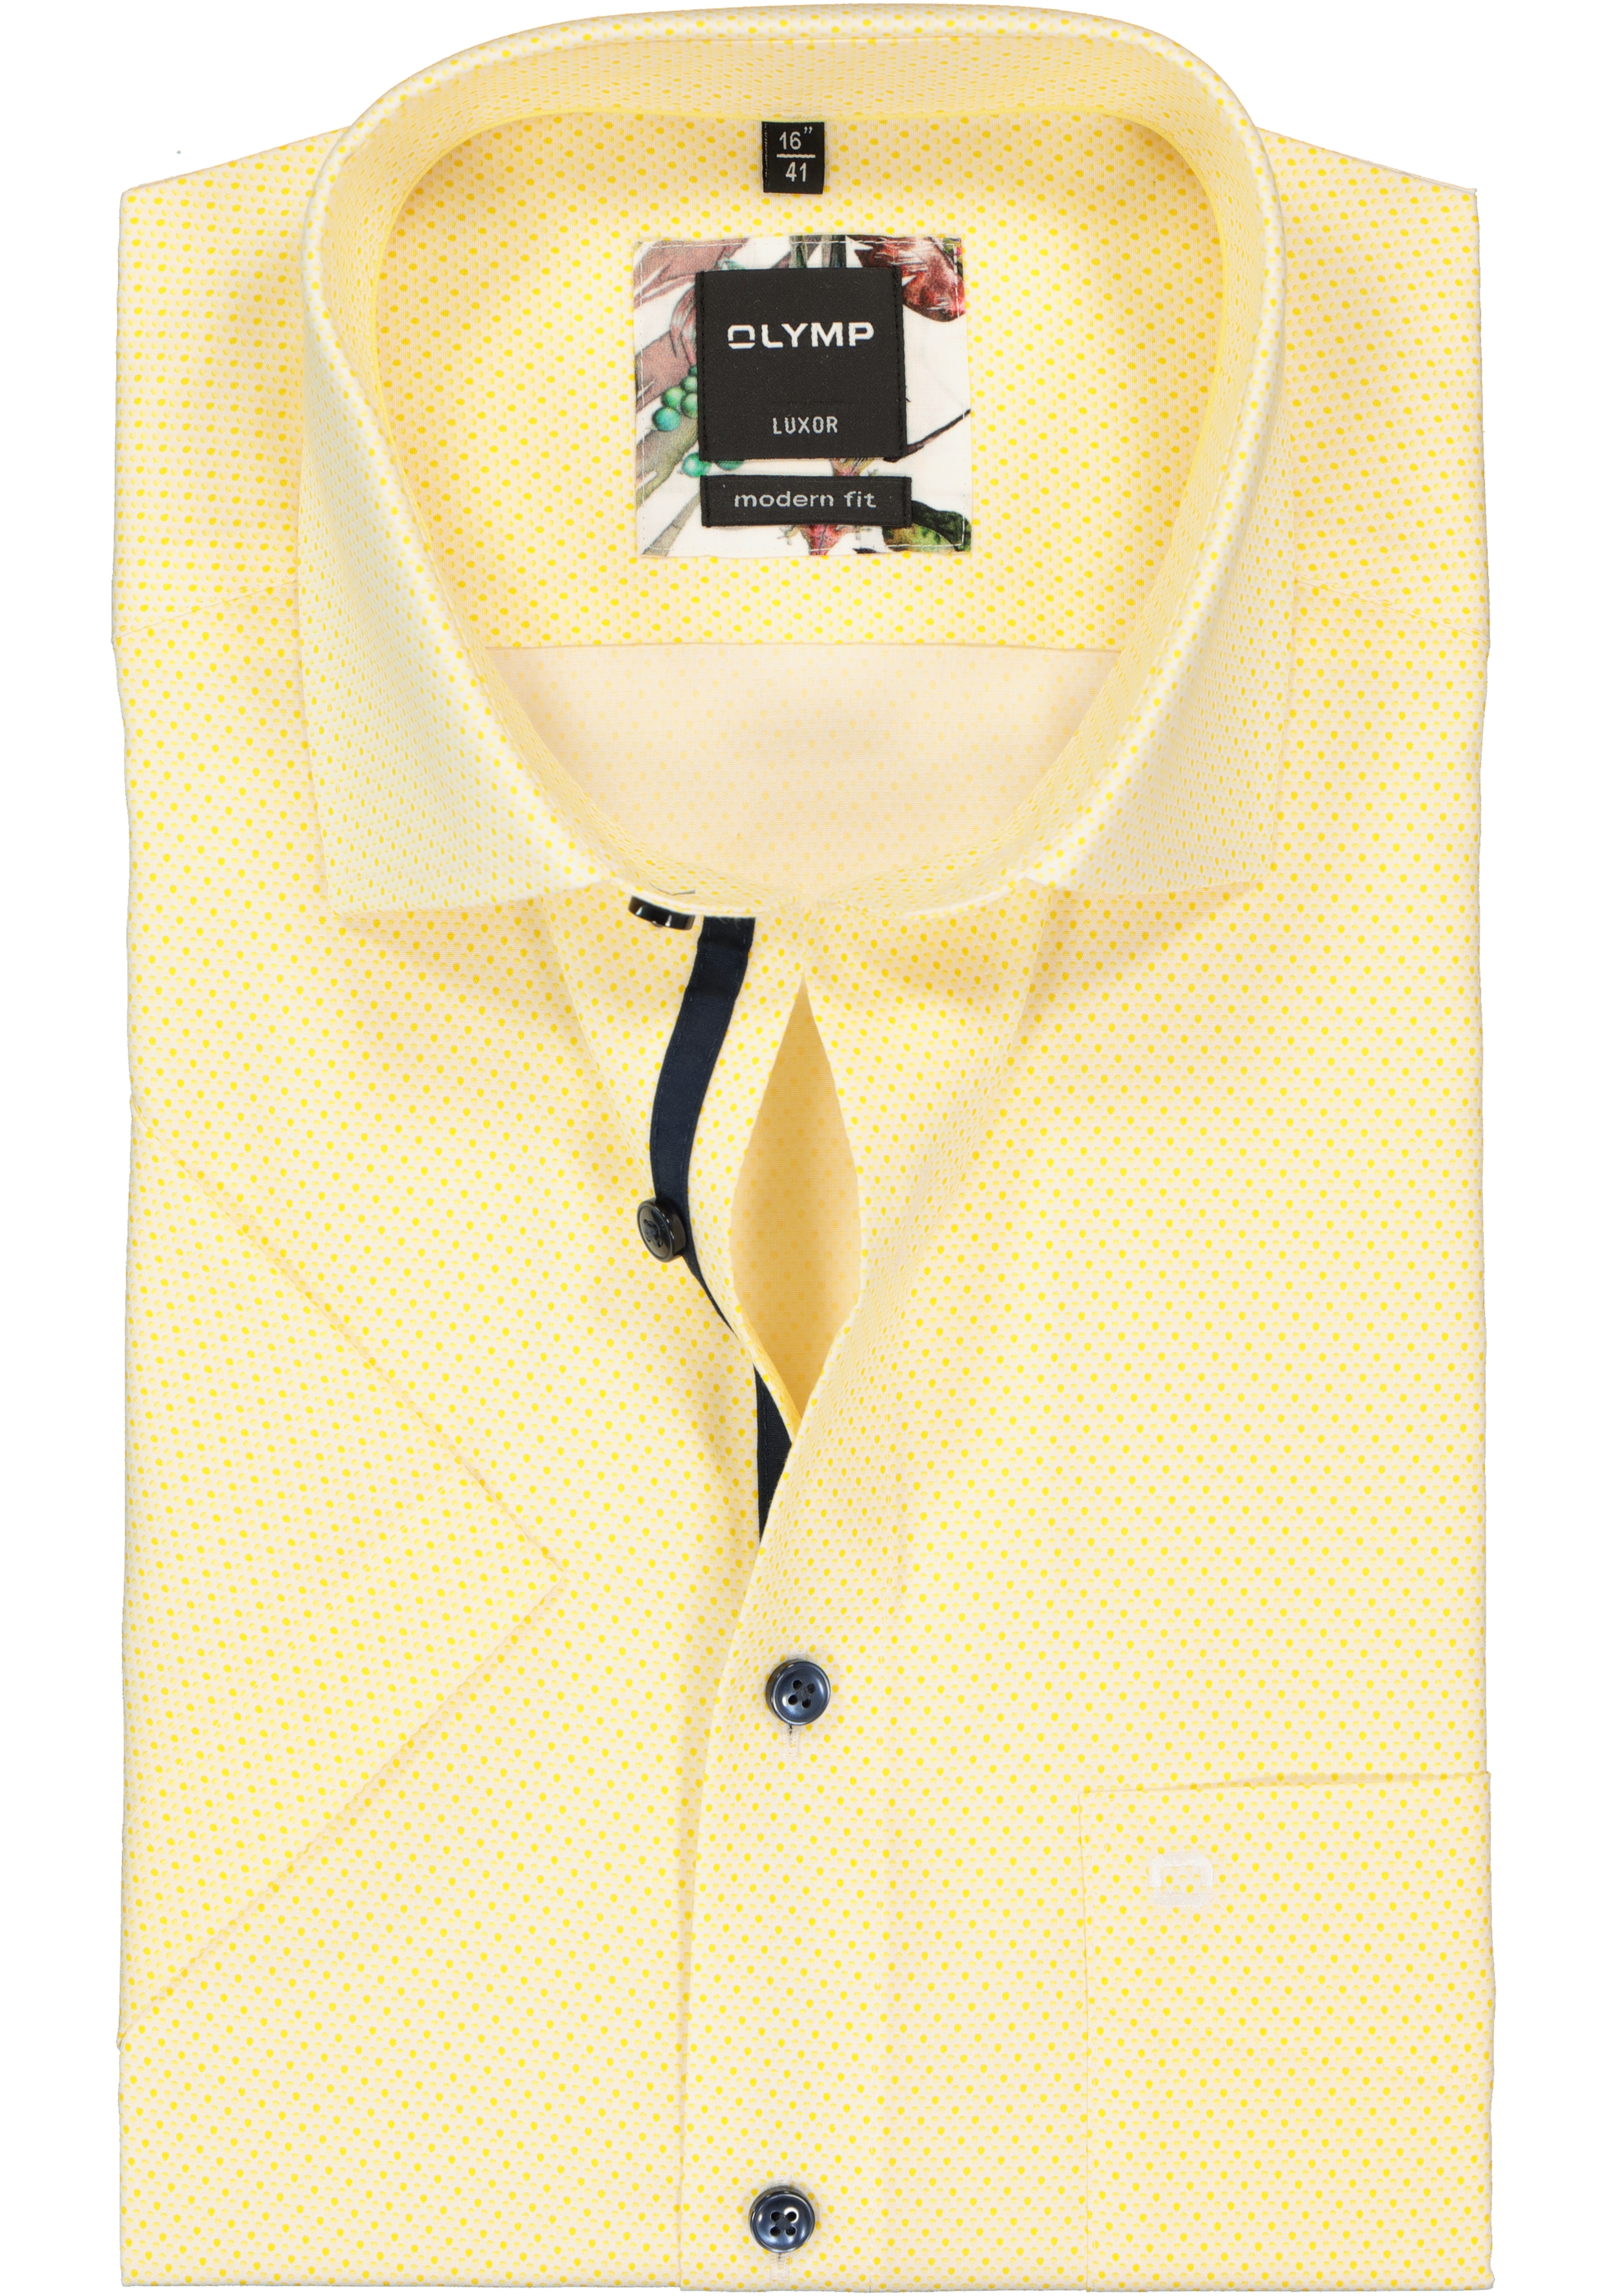 OLYMP Luxor modern fit overhemd, korte mouw, geel mini dessin (contrast)